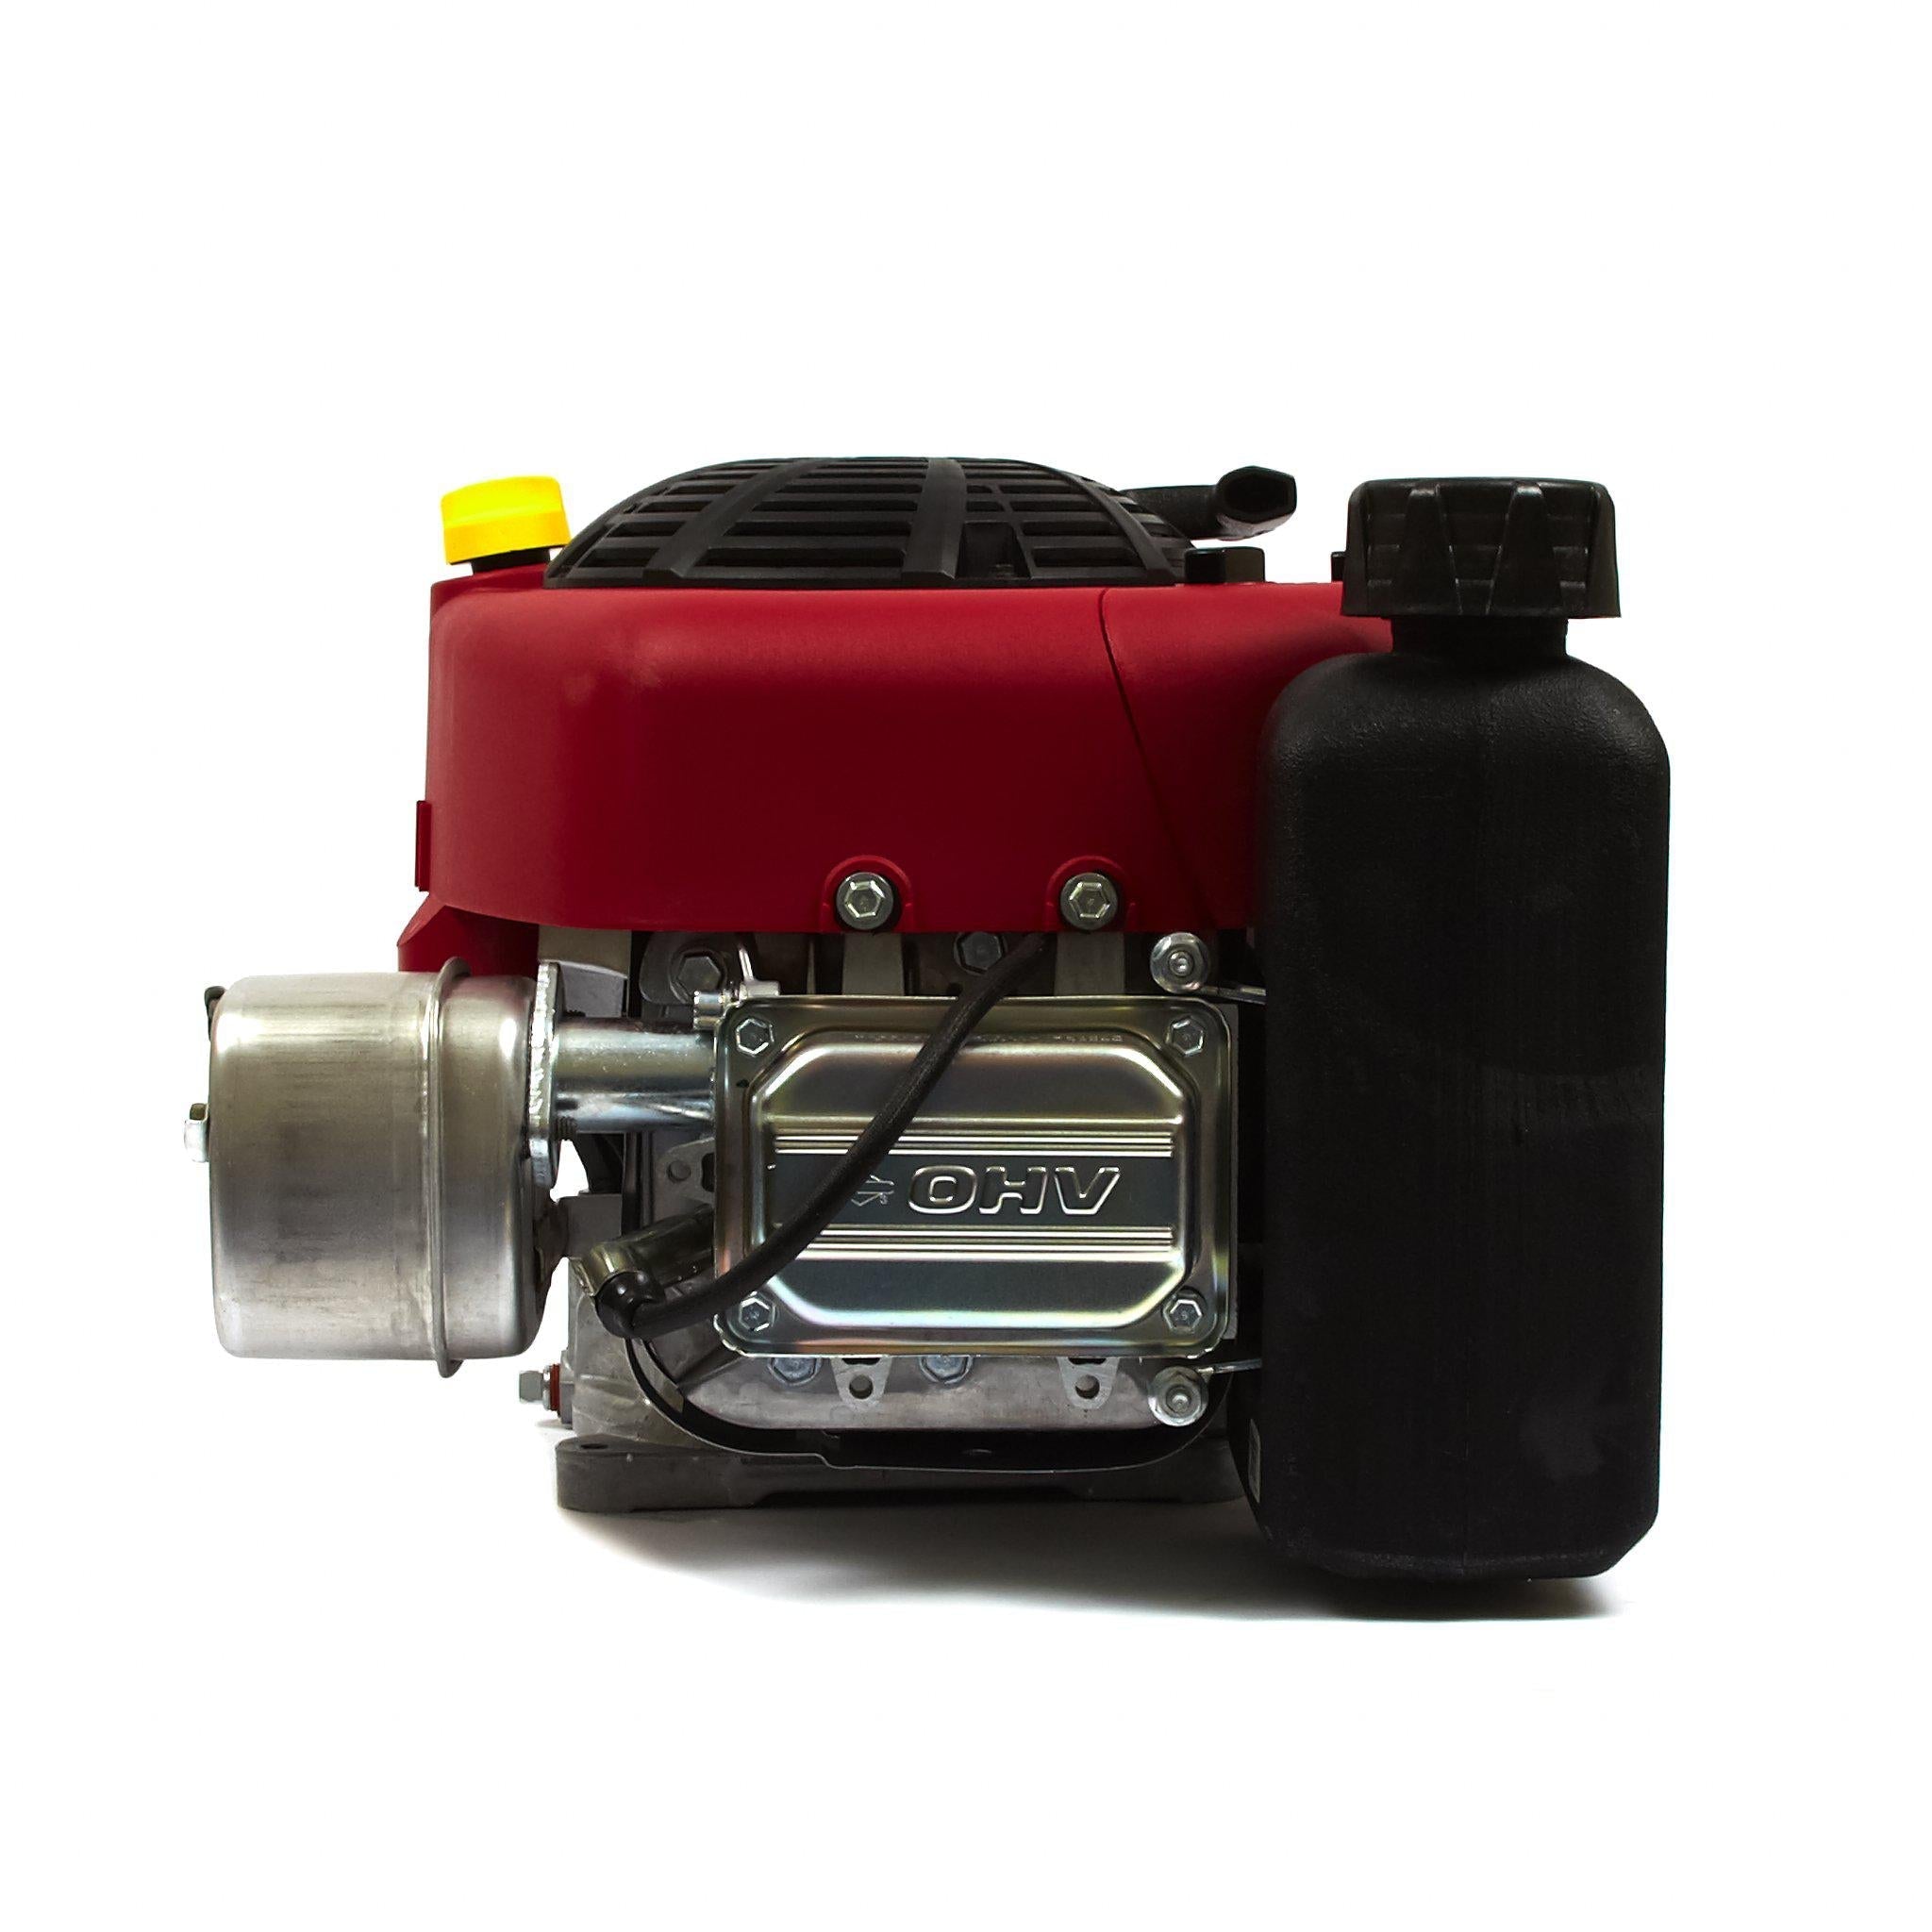 Engine Petrol Vertical Shaft 7.83𝑘𝑊/344cc Intek 10.5 B&S-Small Engines-Briggs & Stratton-diyshop.co.za